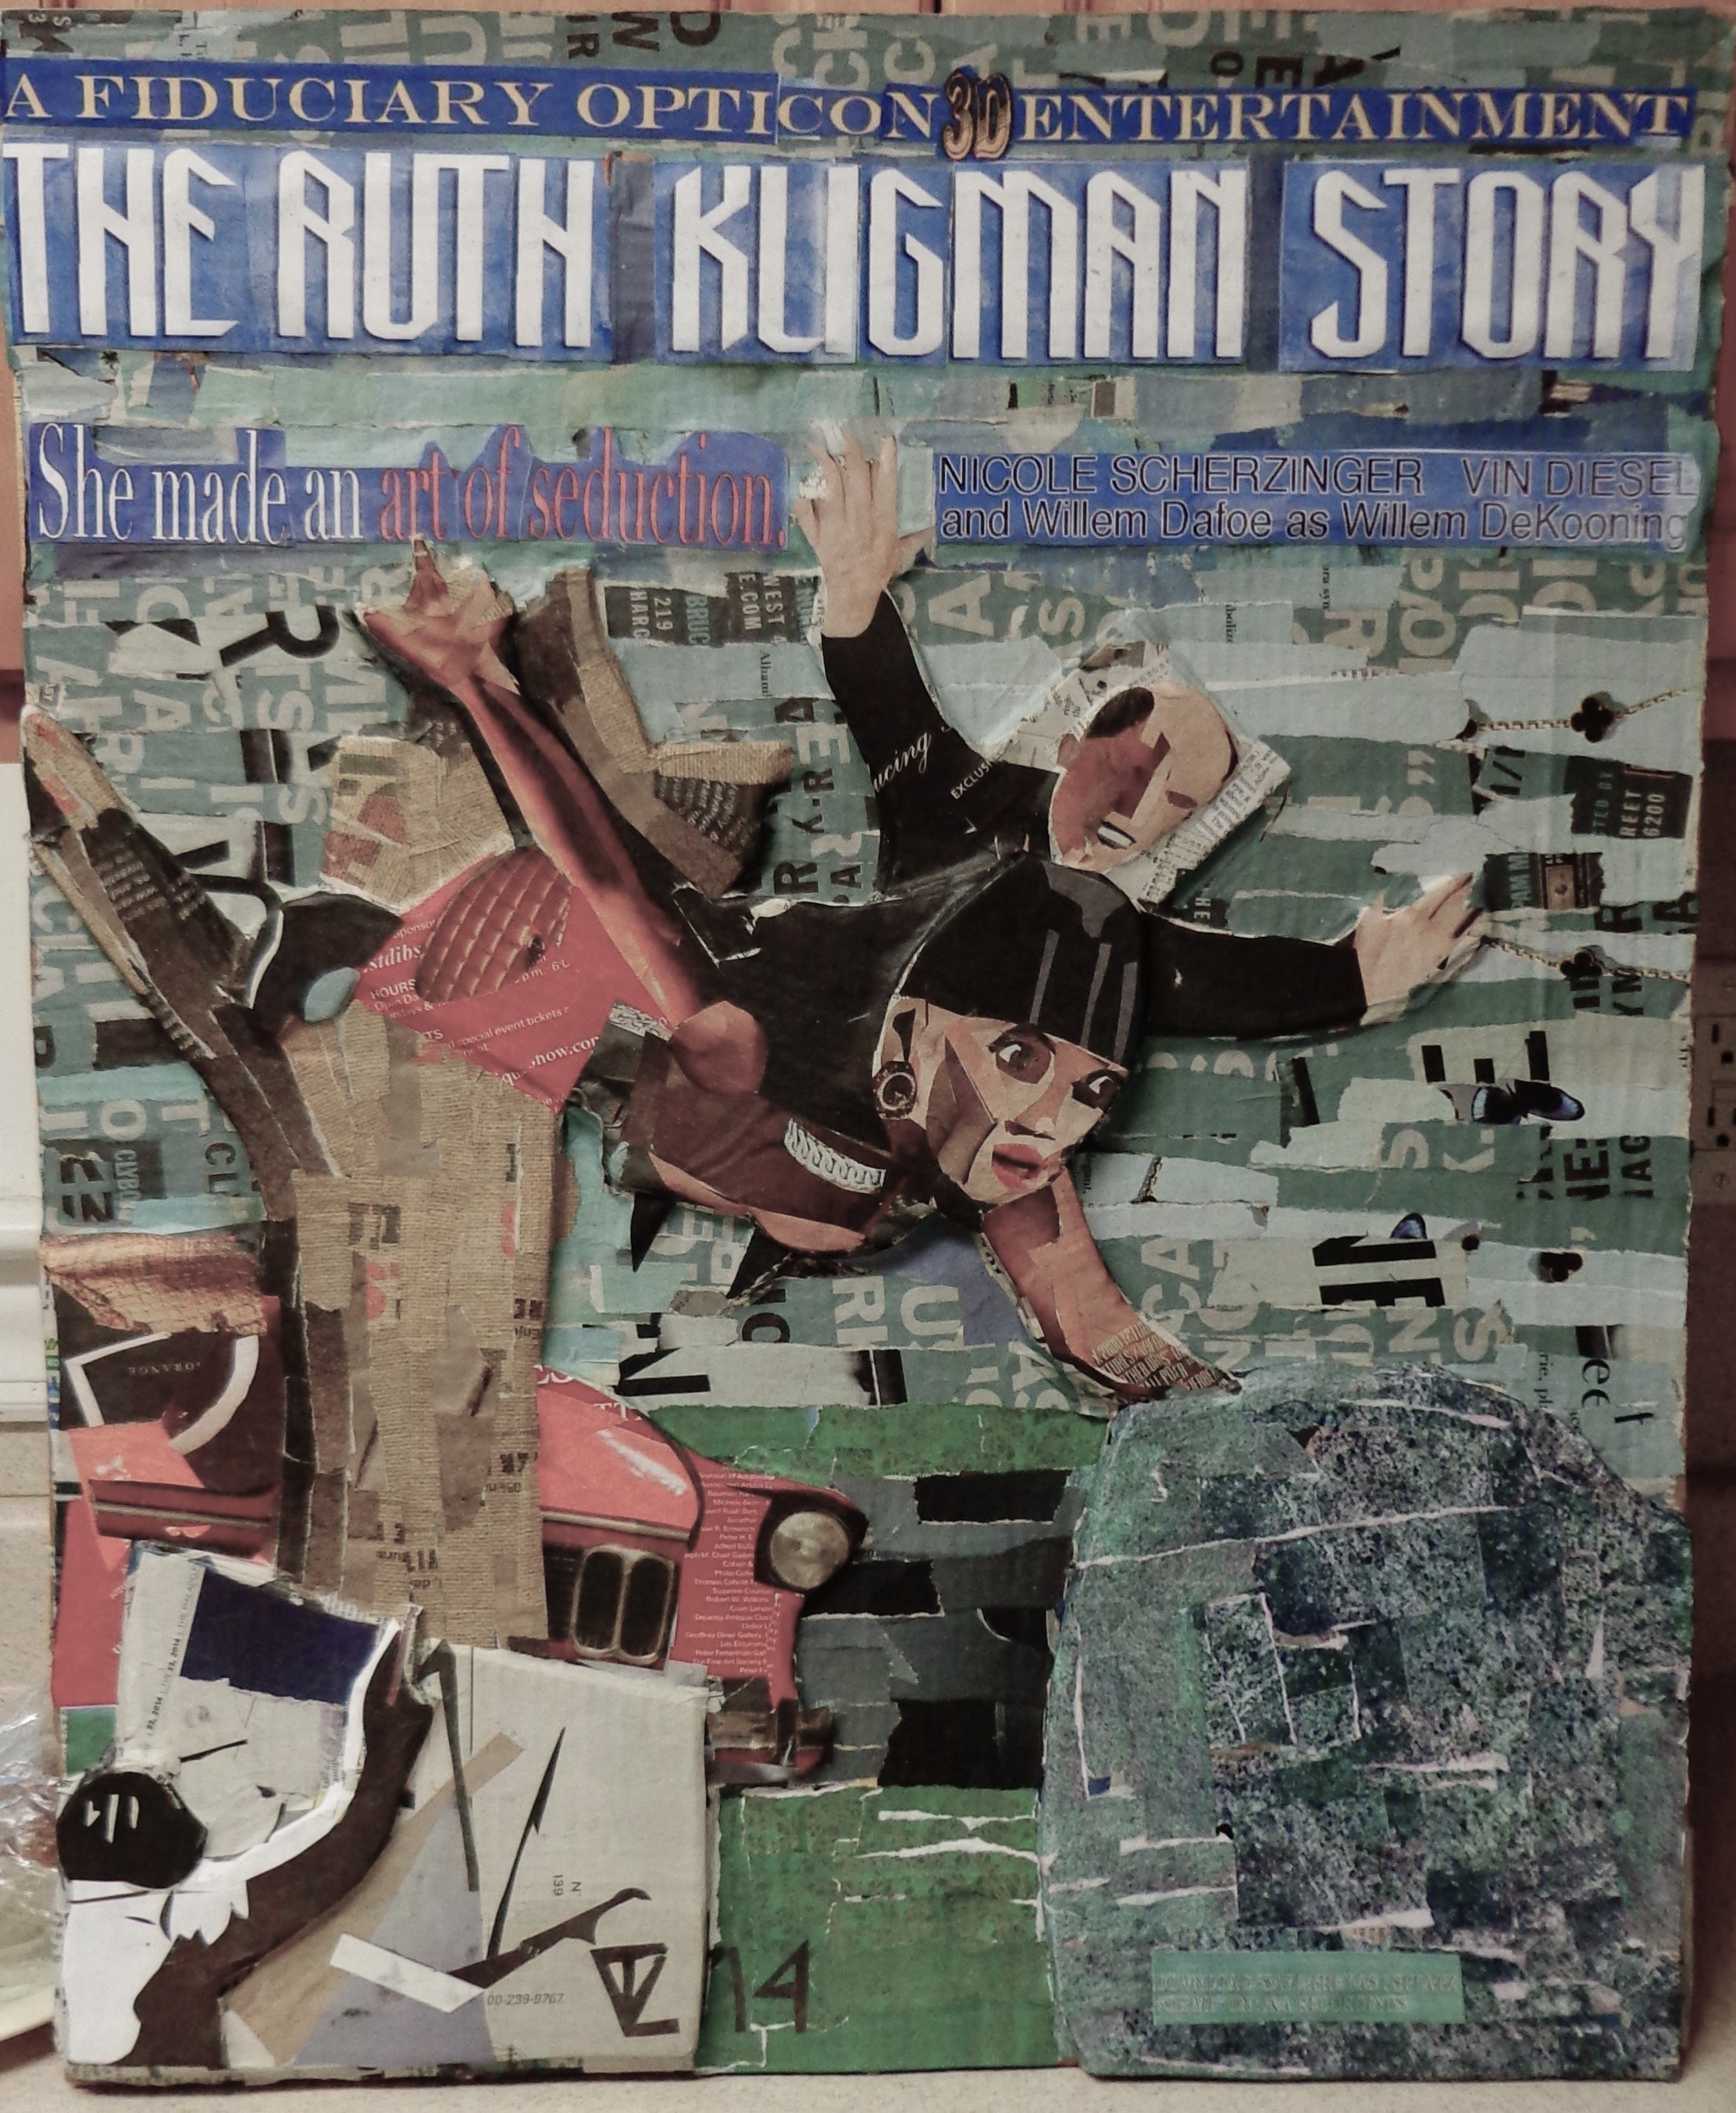 Drew Zimmerman art: The Ruth Kligman Story